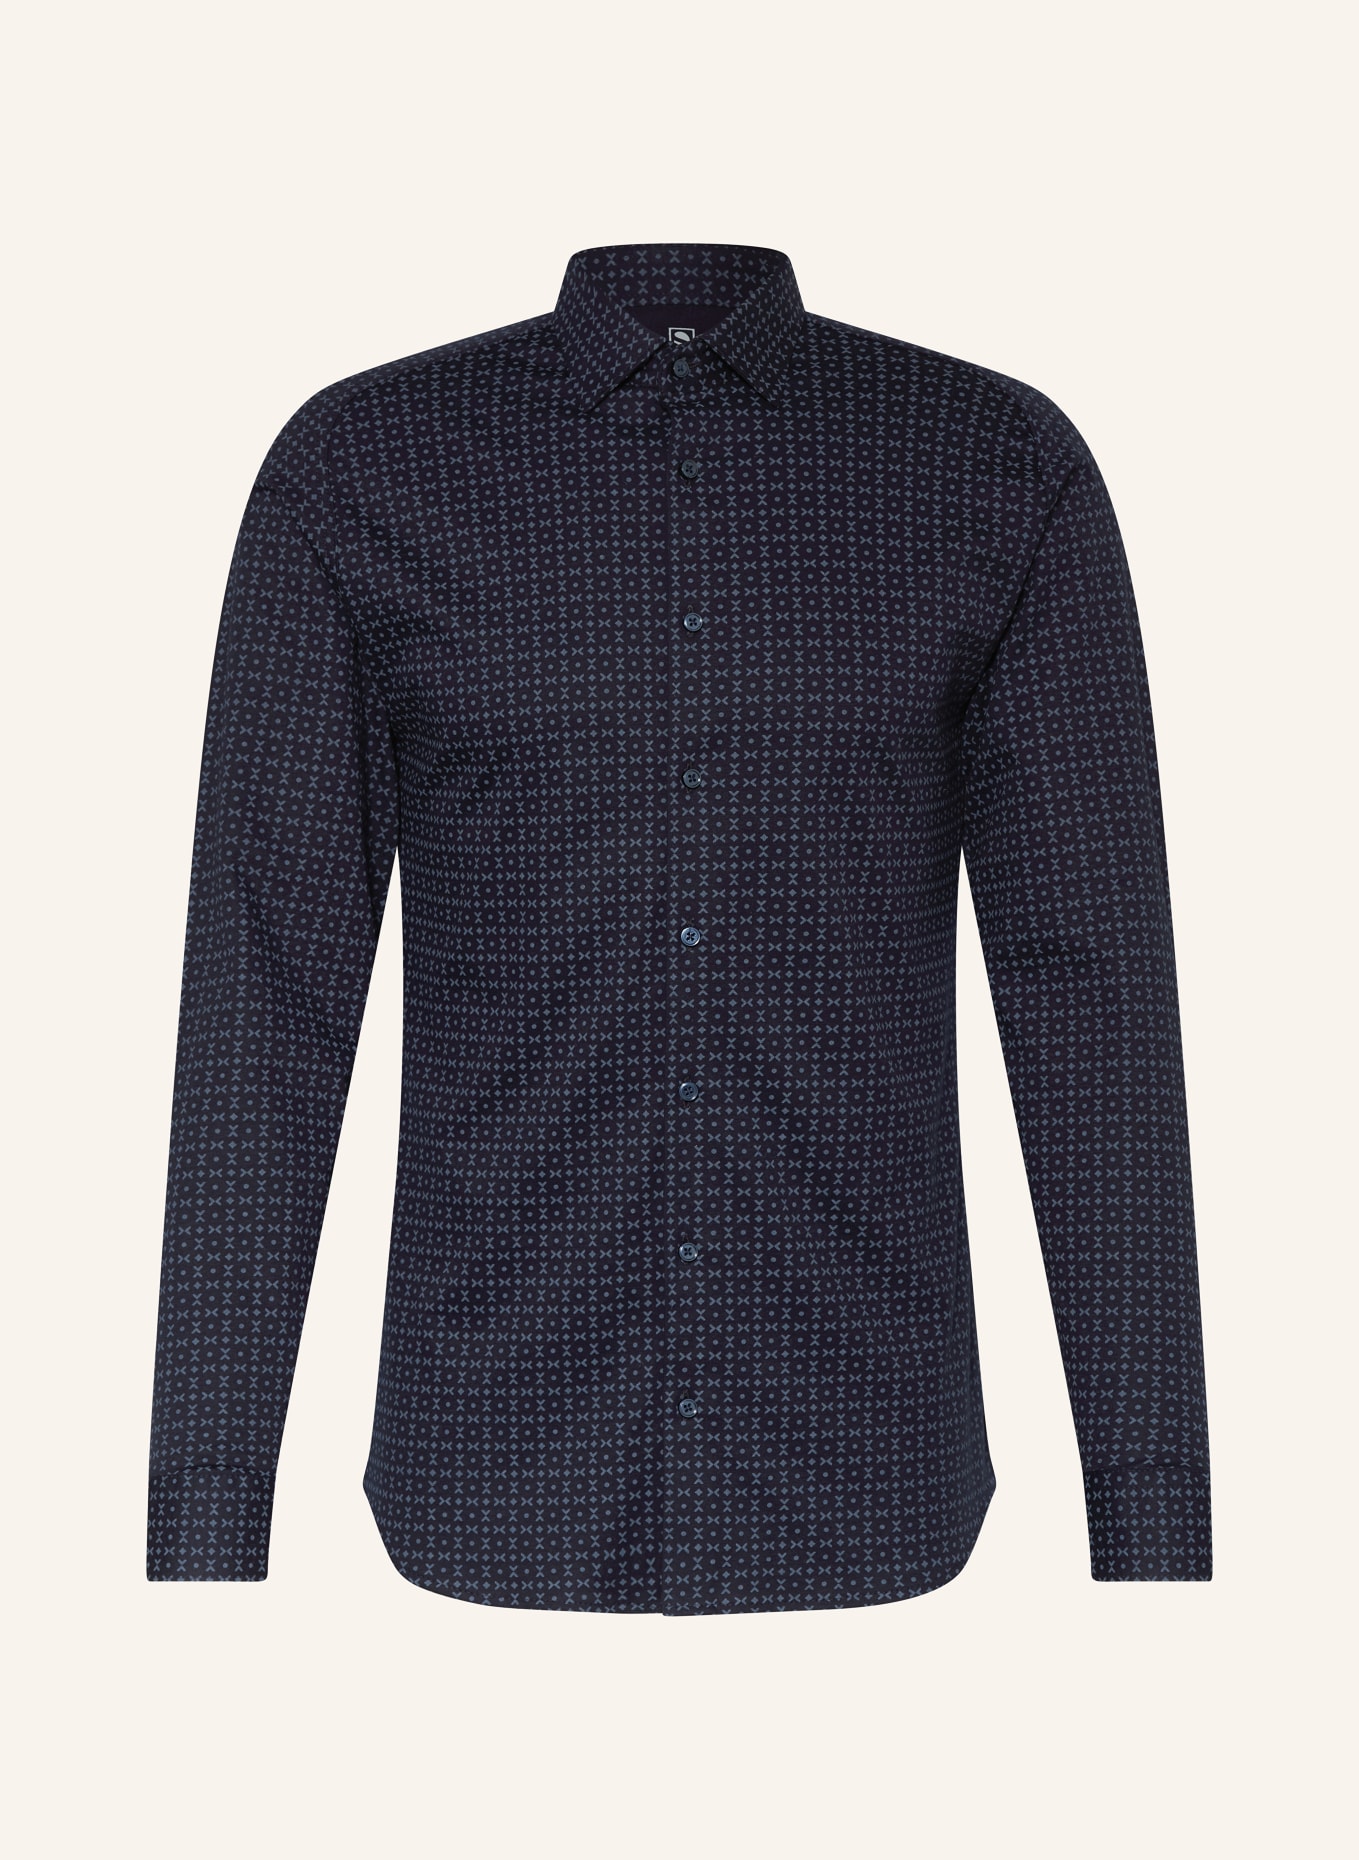 DESOTO Jerseyhemd Slim Fit, Farbe: DUNKELBLAU/ BLAUGRAU (Bild 1)